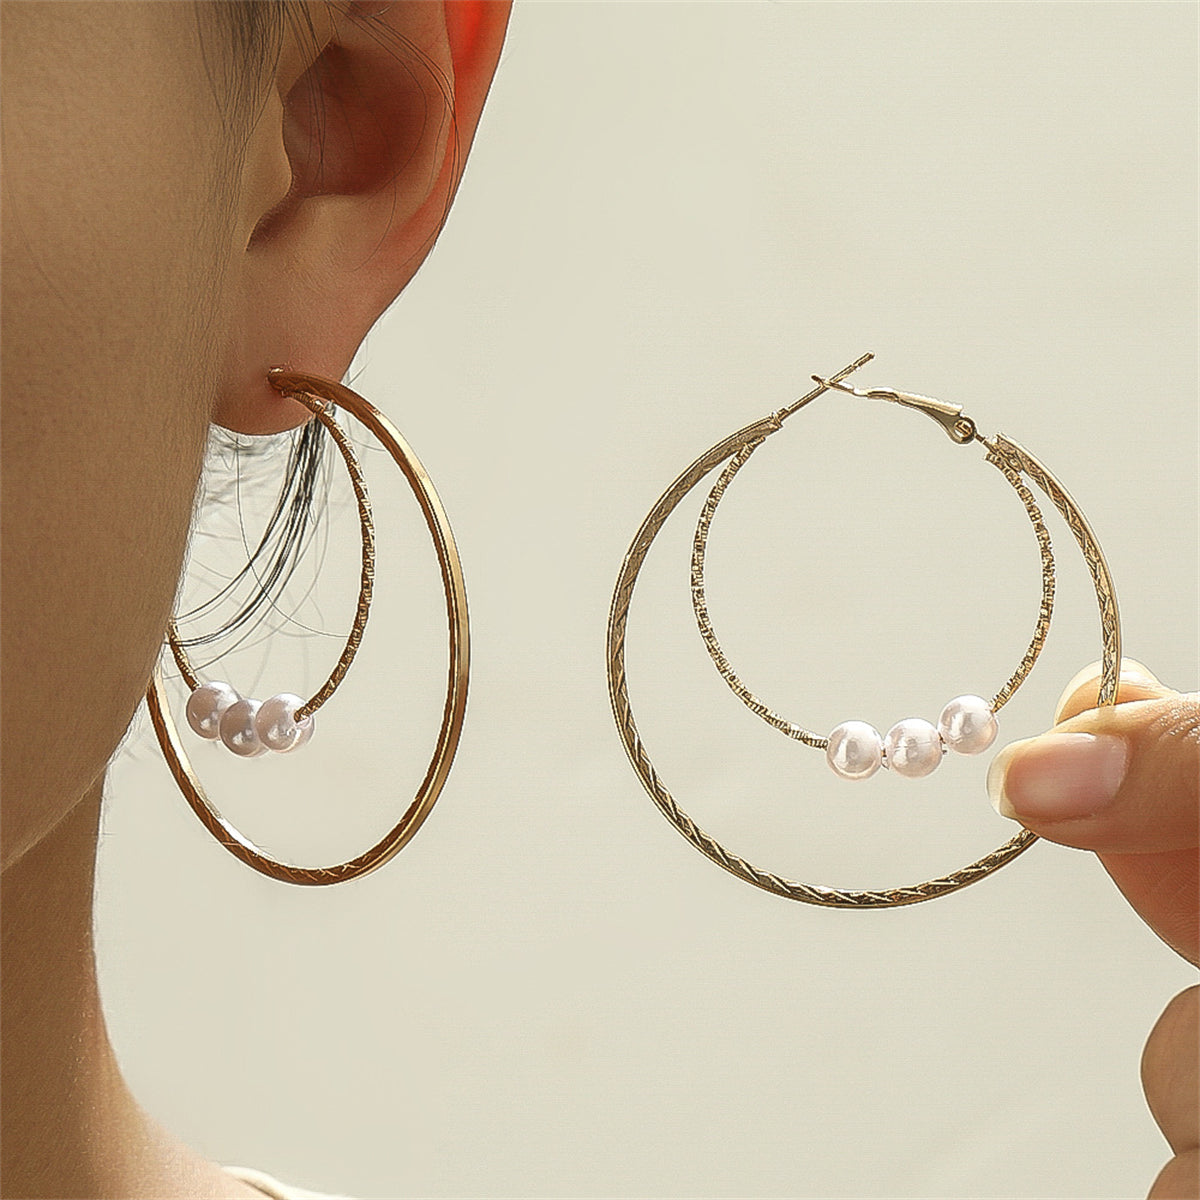 Pearl & 18K Gold-Plated Double Hoop Earrings